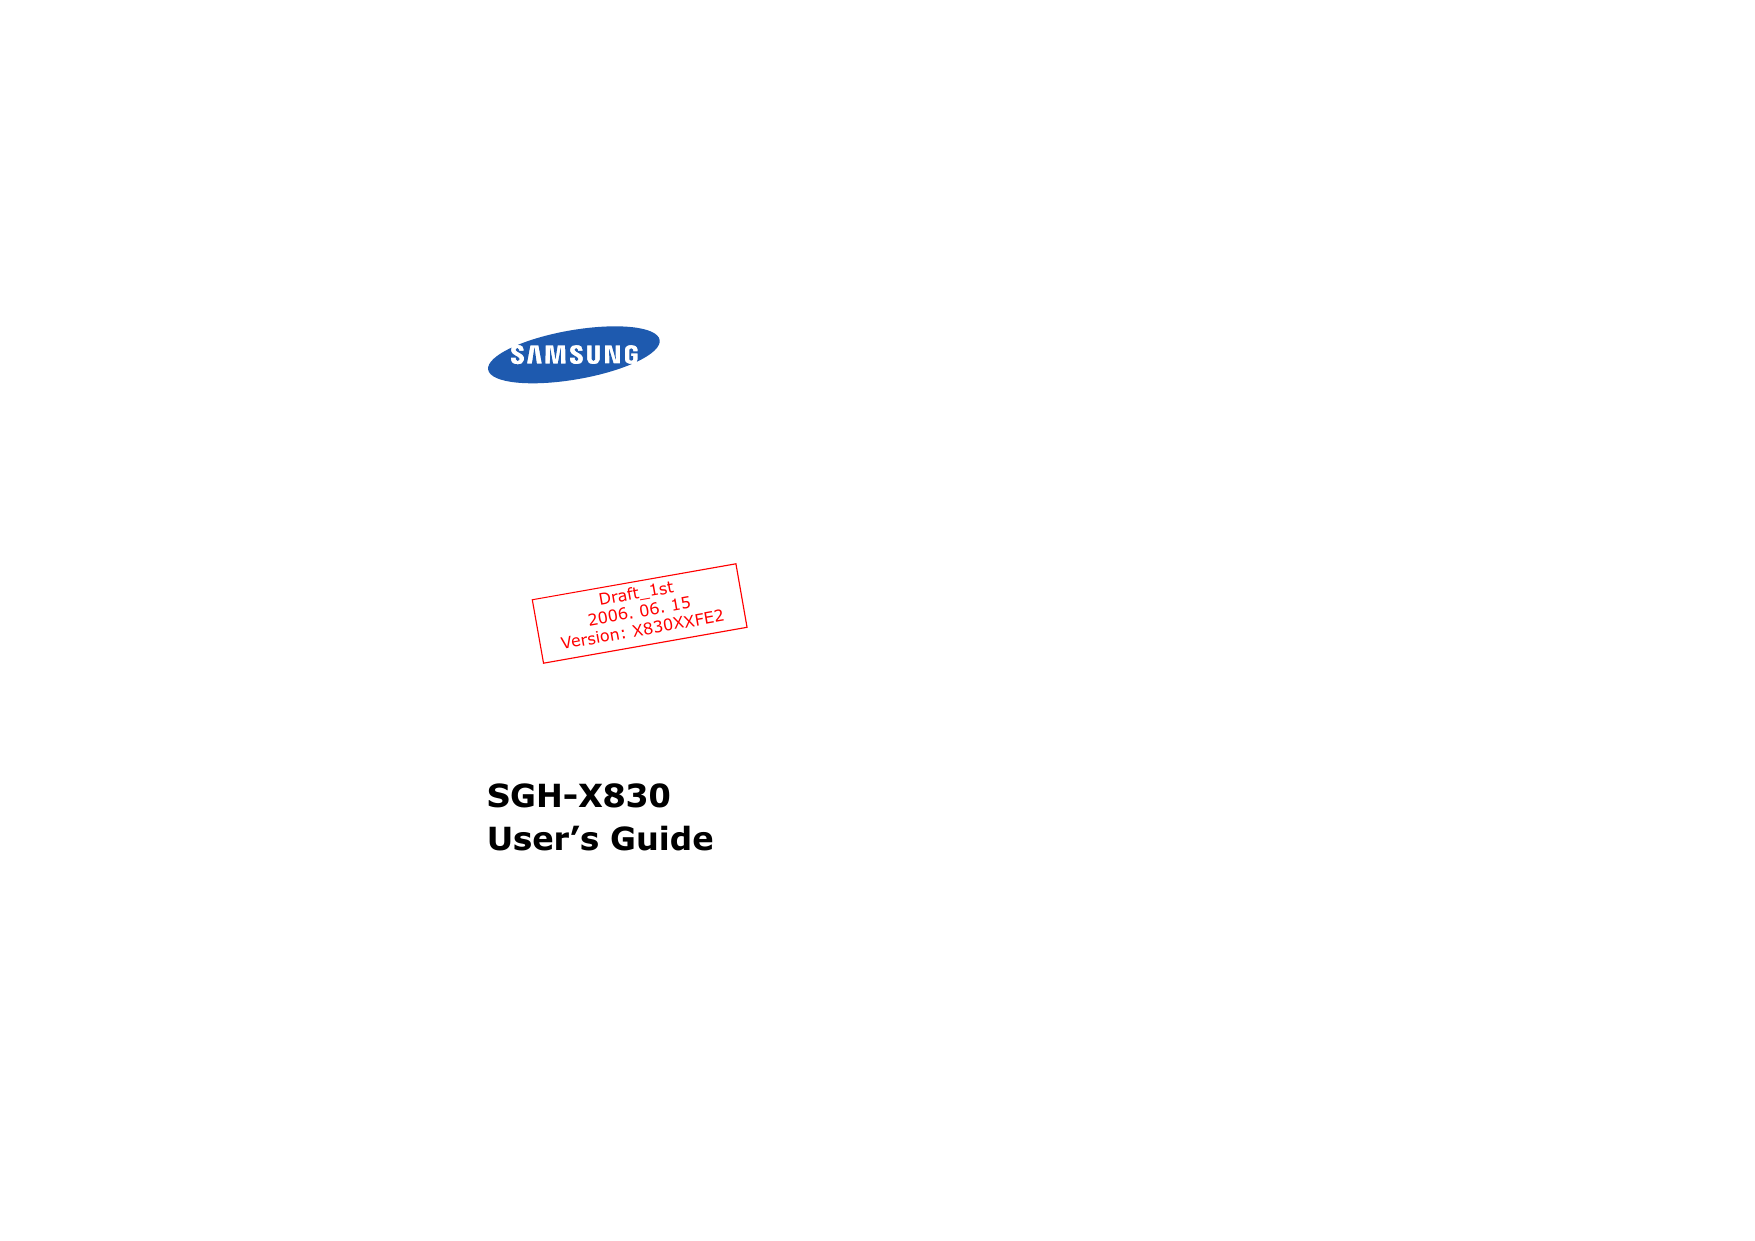 SGH-X830User’s GuideDraft_1st2006. 06. 15Version: X830XXFE2